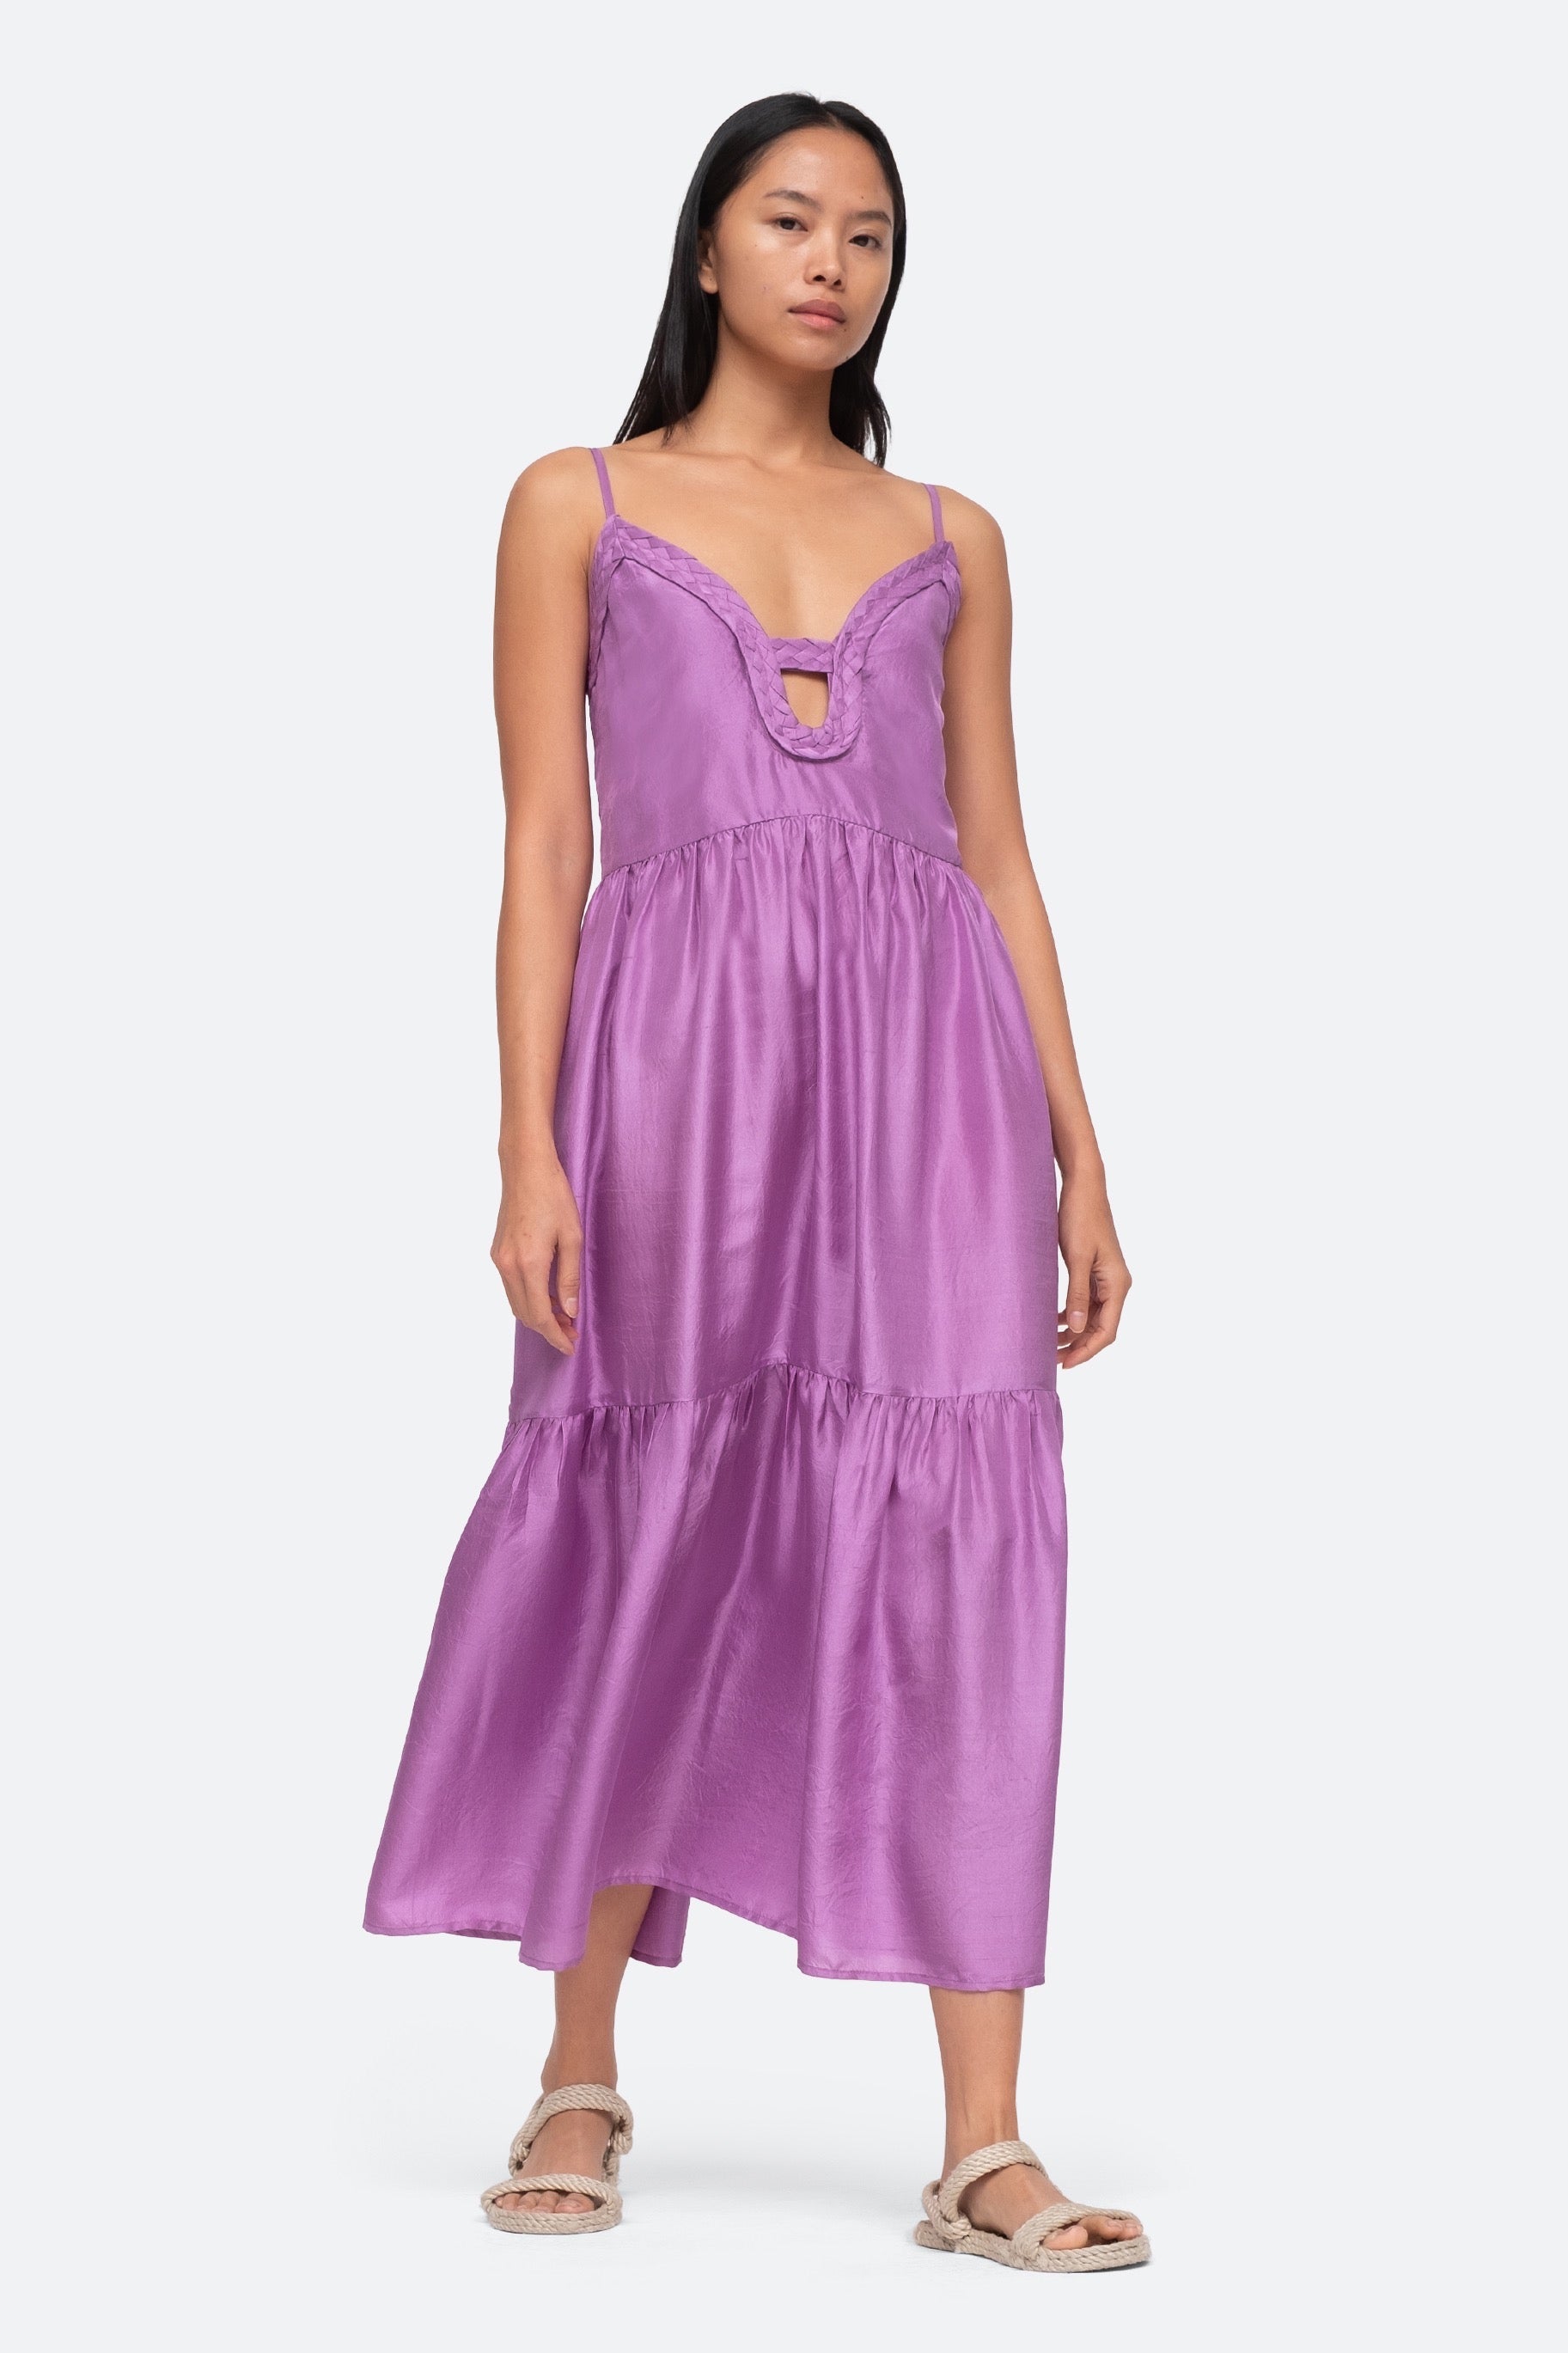 SEA Kyle Solid Silk Slip Dress in Lavender